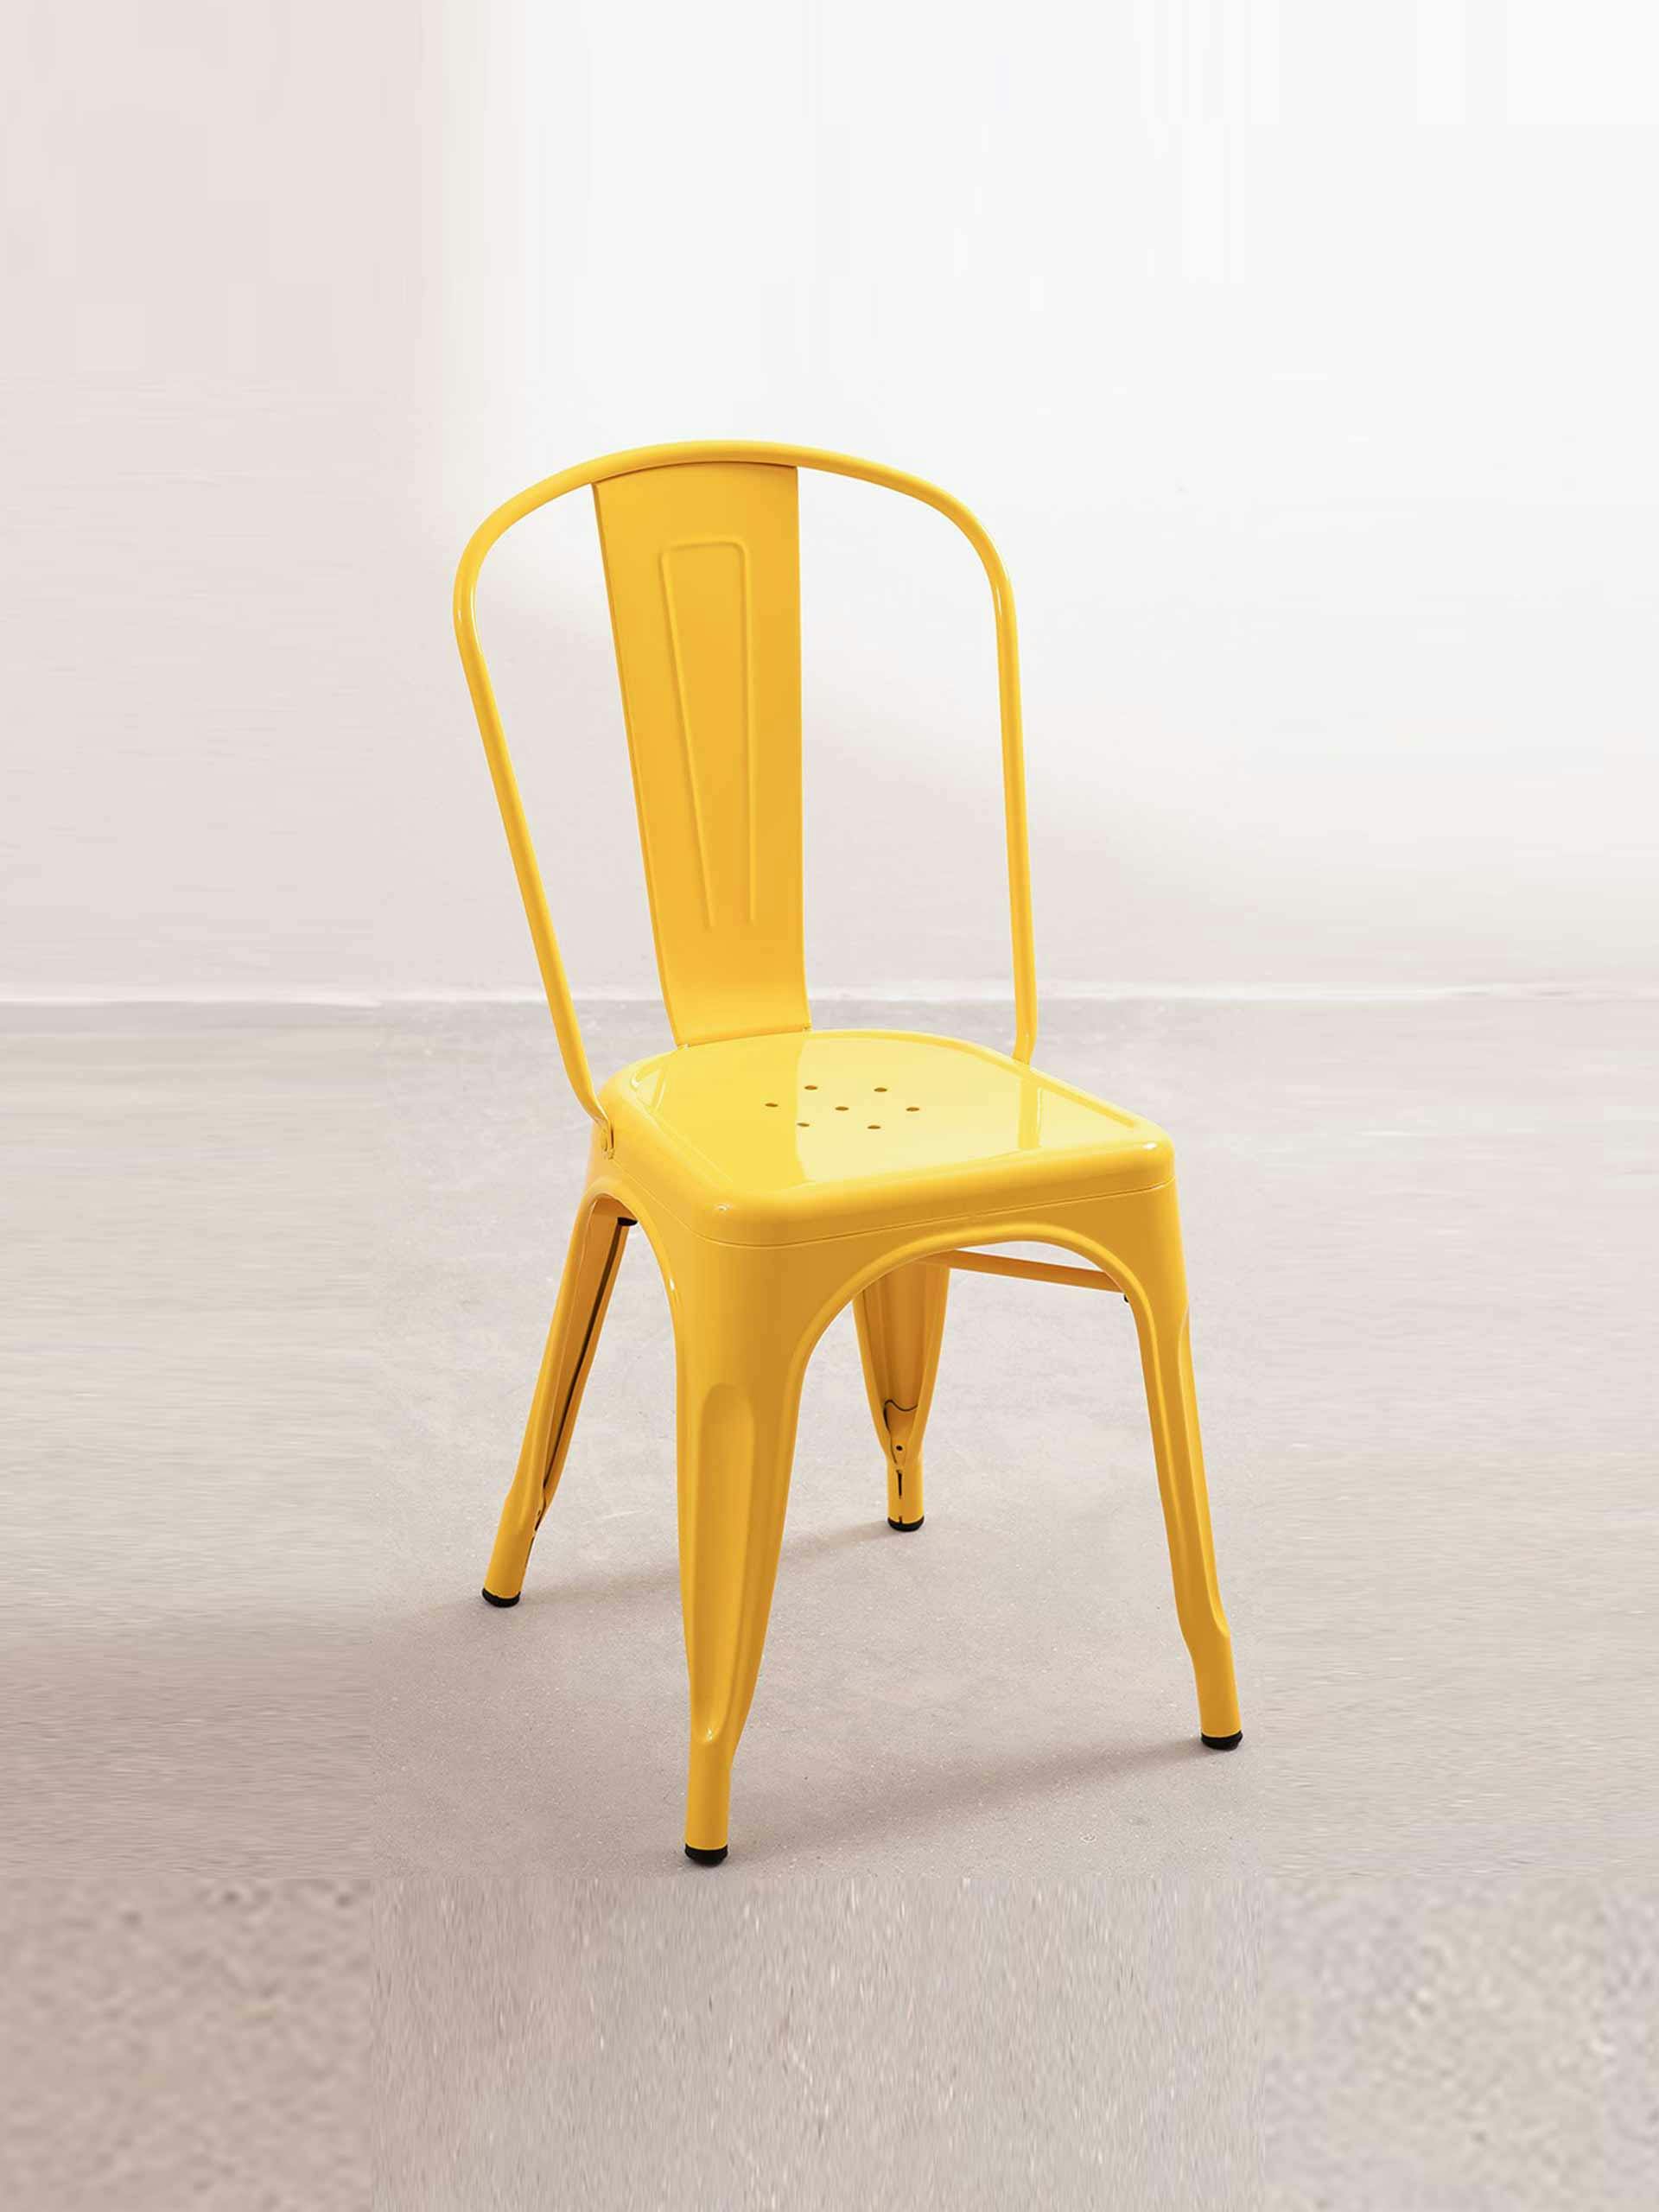 Yellow steel chair